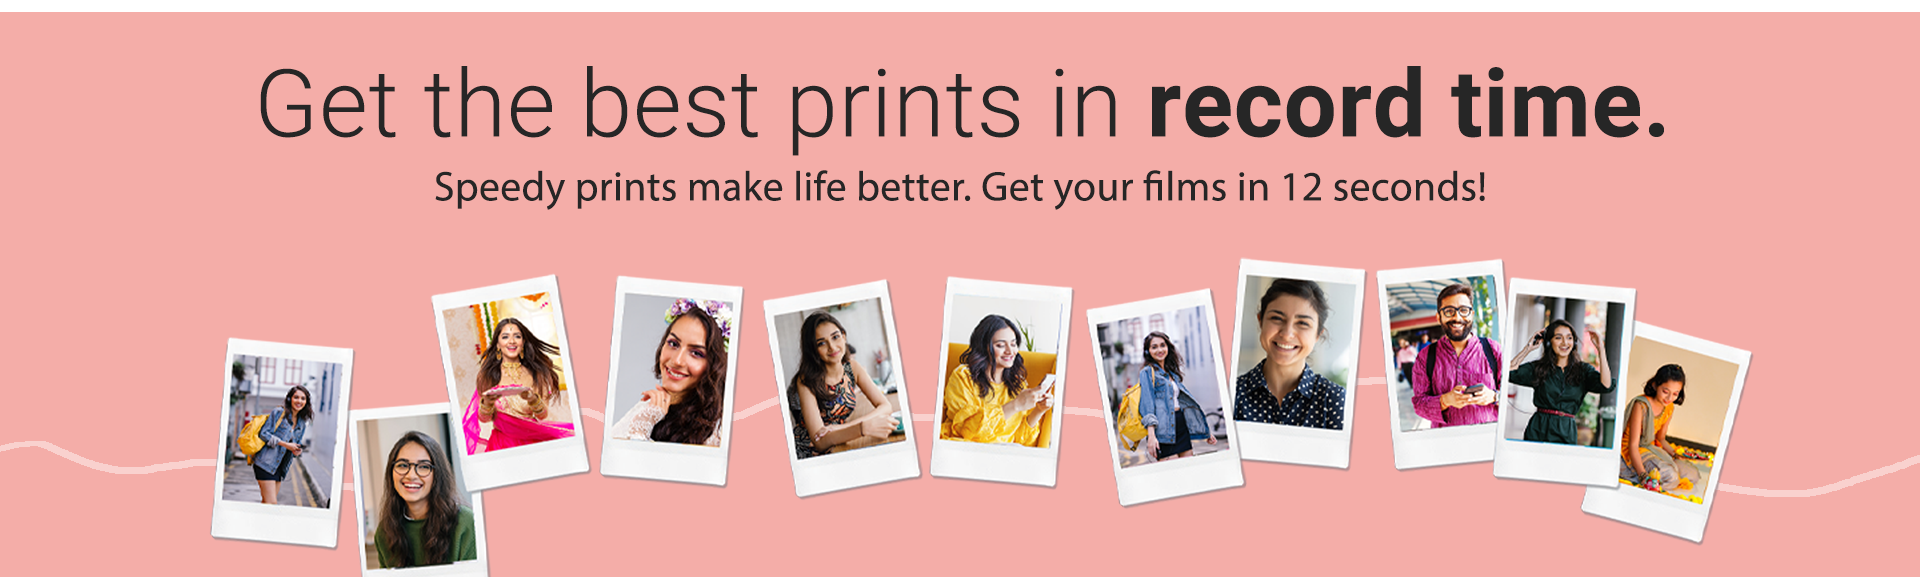 Instax Mini LiPlay - Print photos in 12 seconds